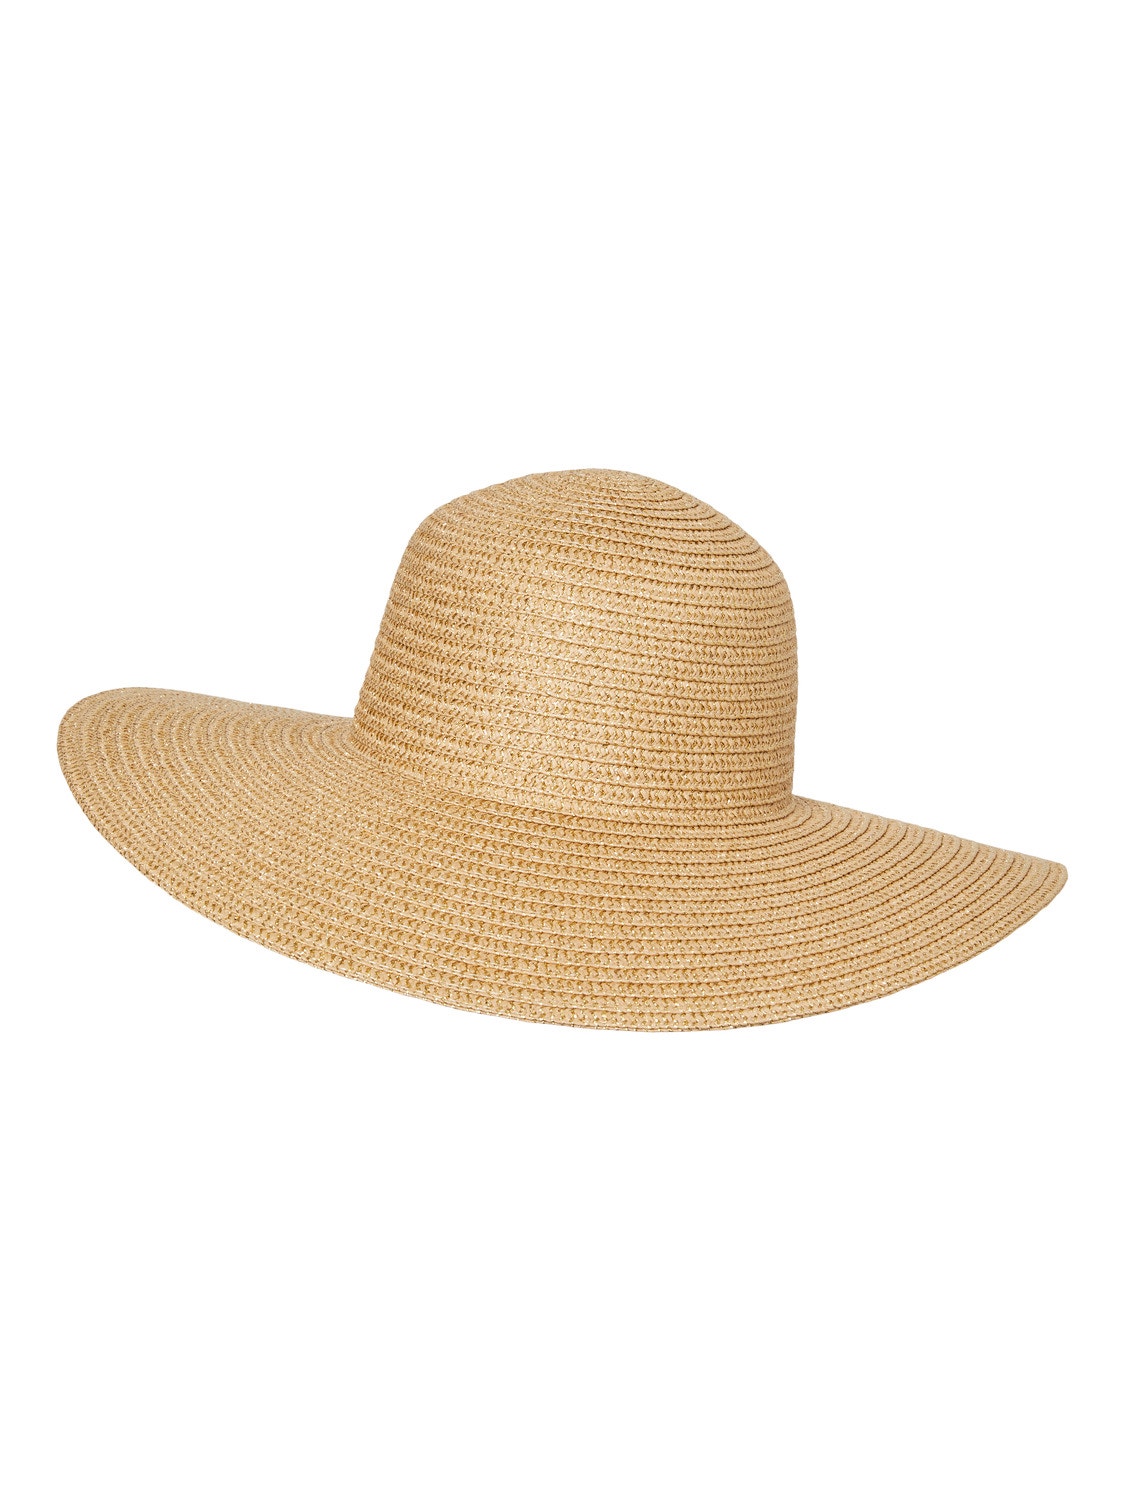 Vero Moda Hat -Natural - 10306019